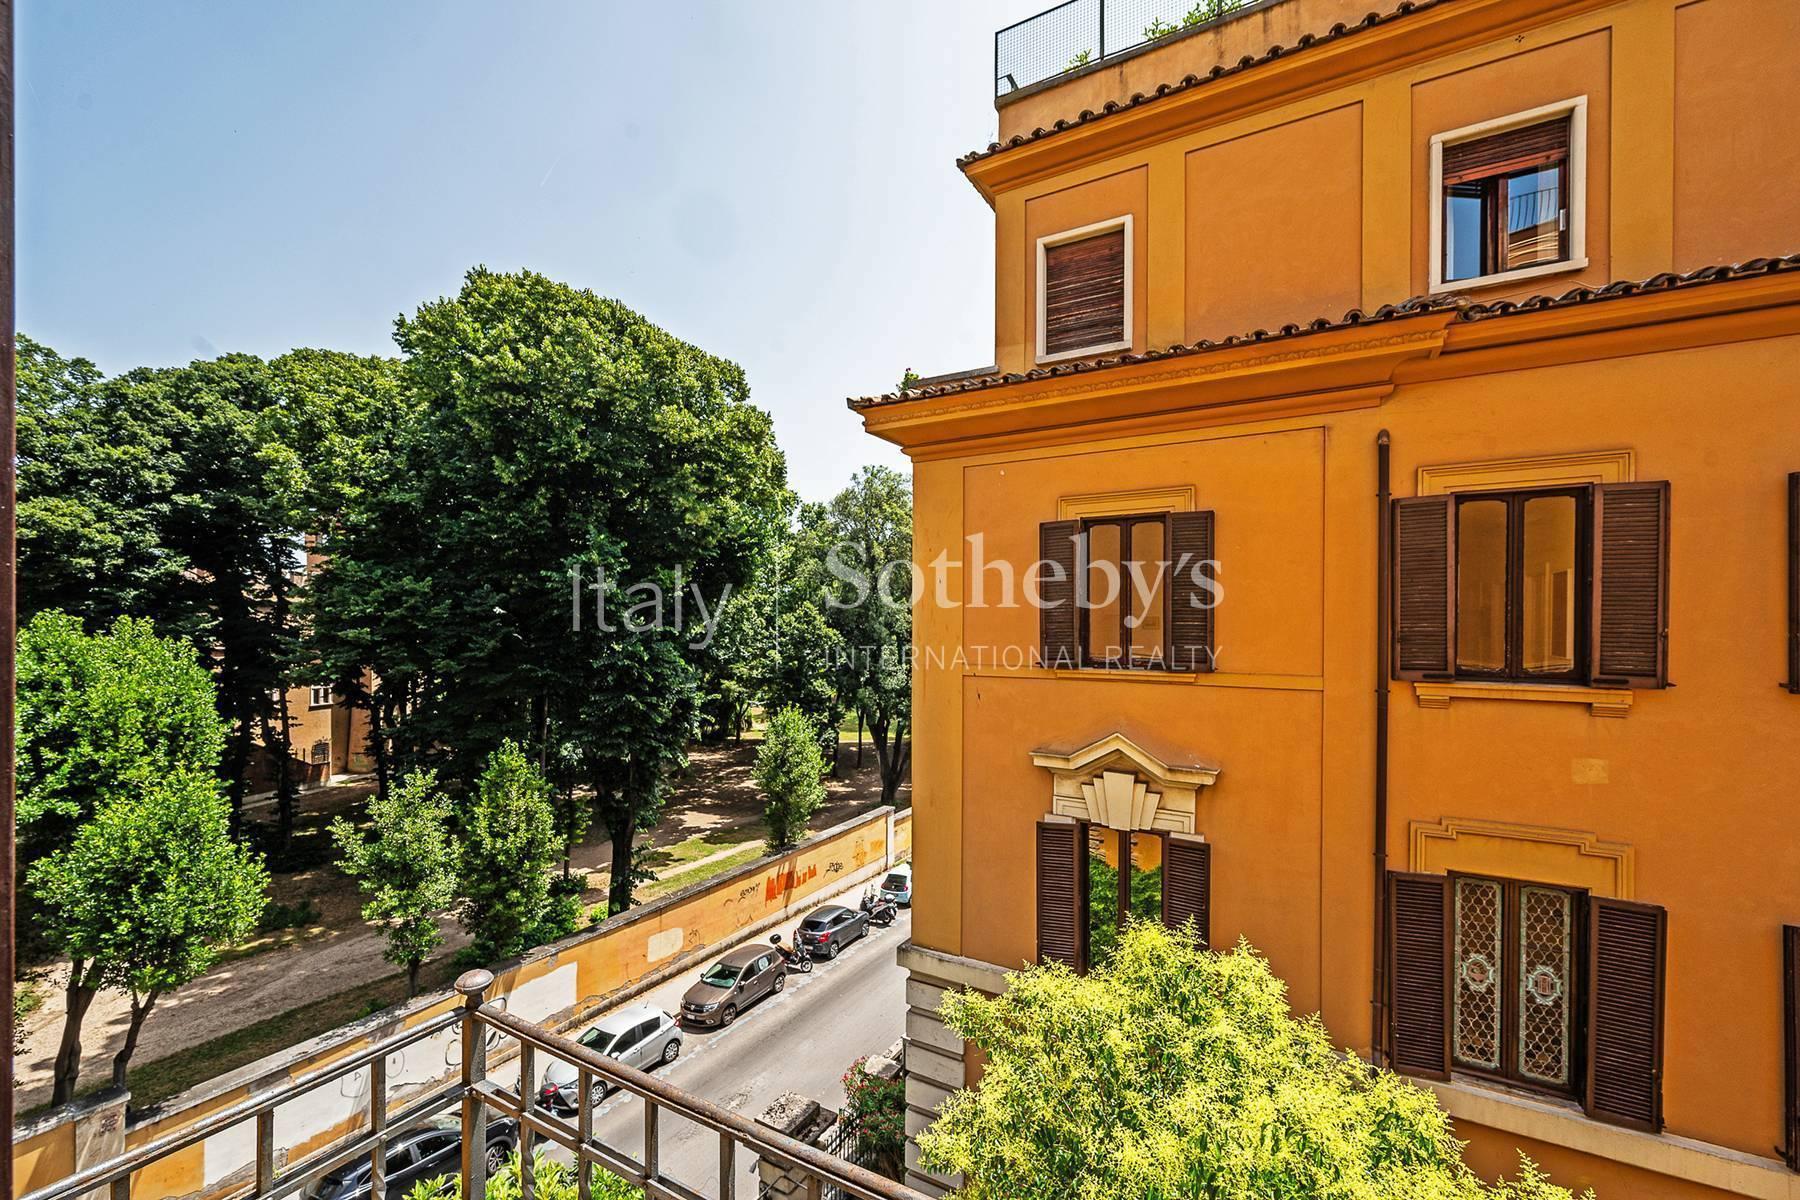 Stunning apartment with spectacular views of Villa Torlonia - 3